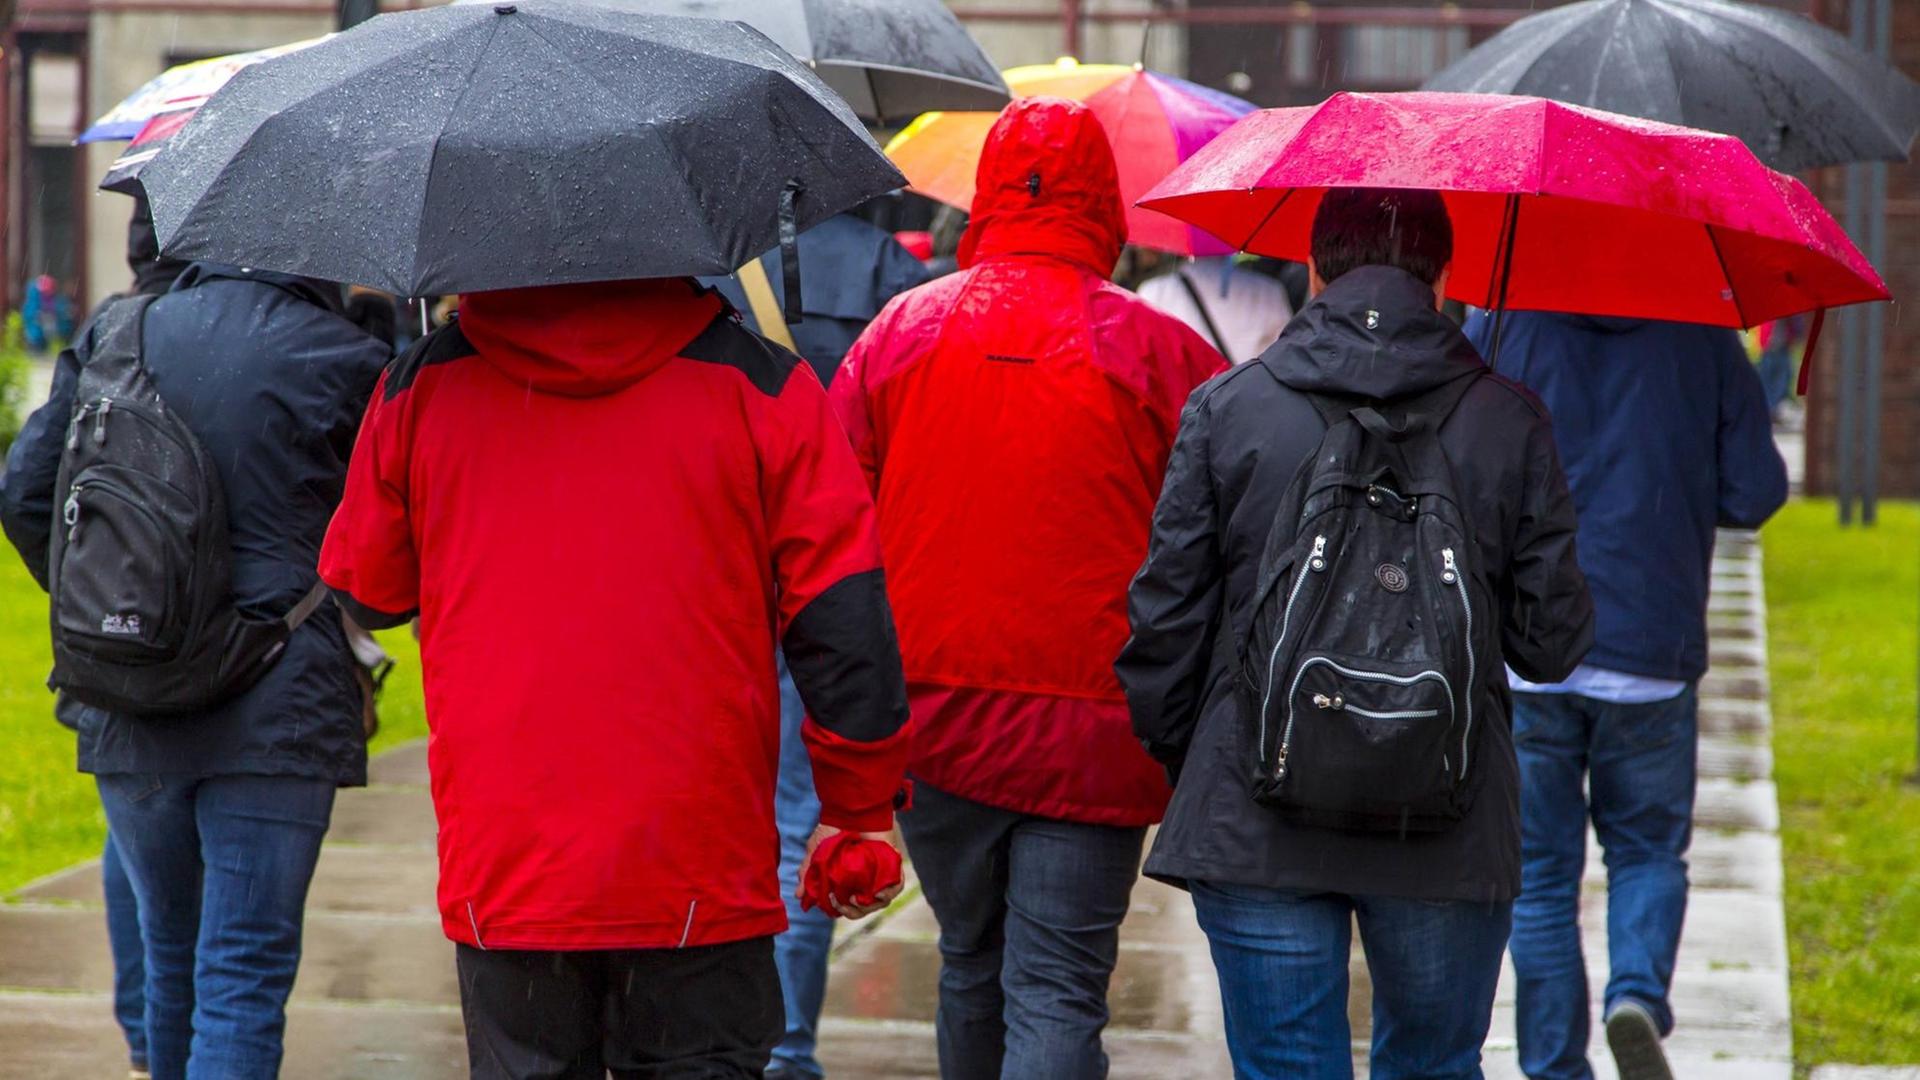 Menschen bei Regenwetter, in Regenkleidung, mit Regenschirmen.